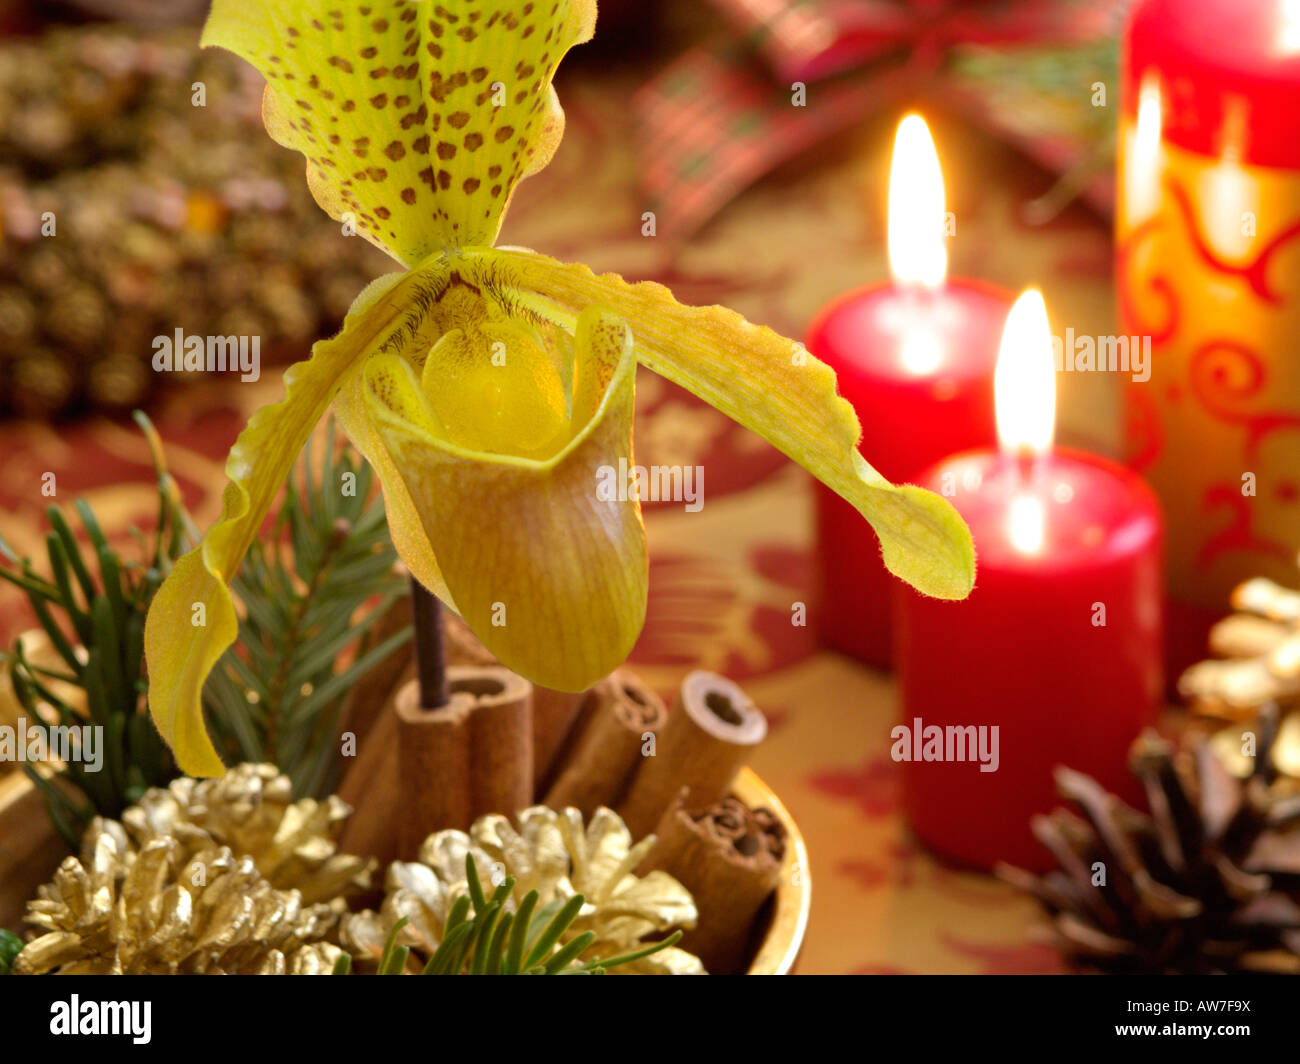 Lady's slipper orchid (Paphiopedilum) Stock Photo